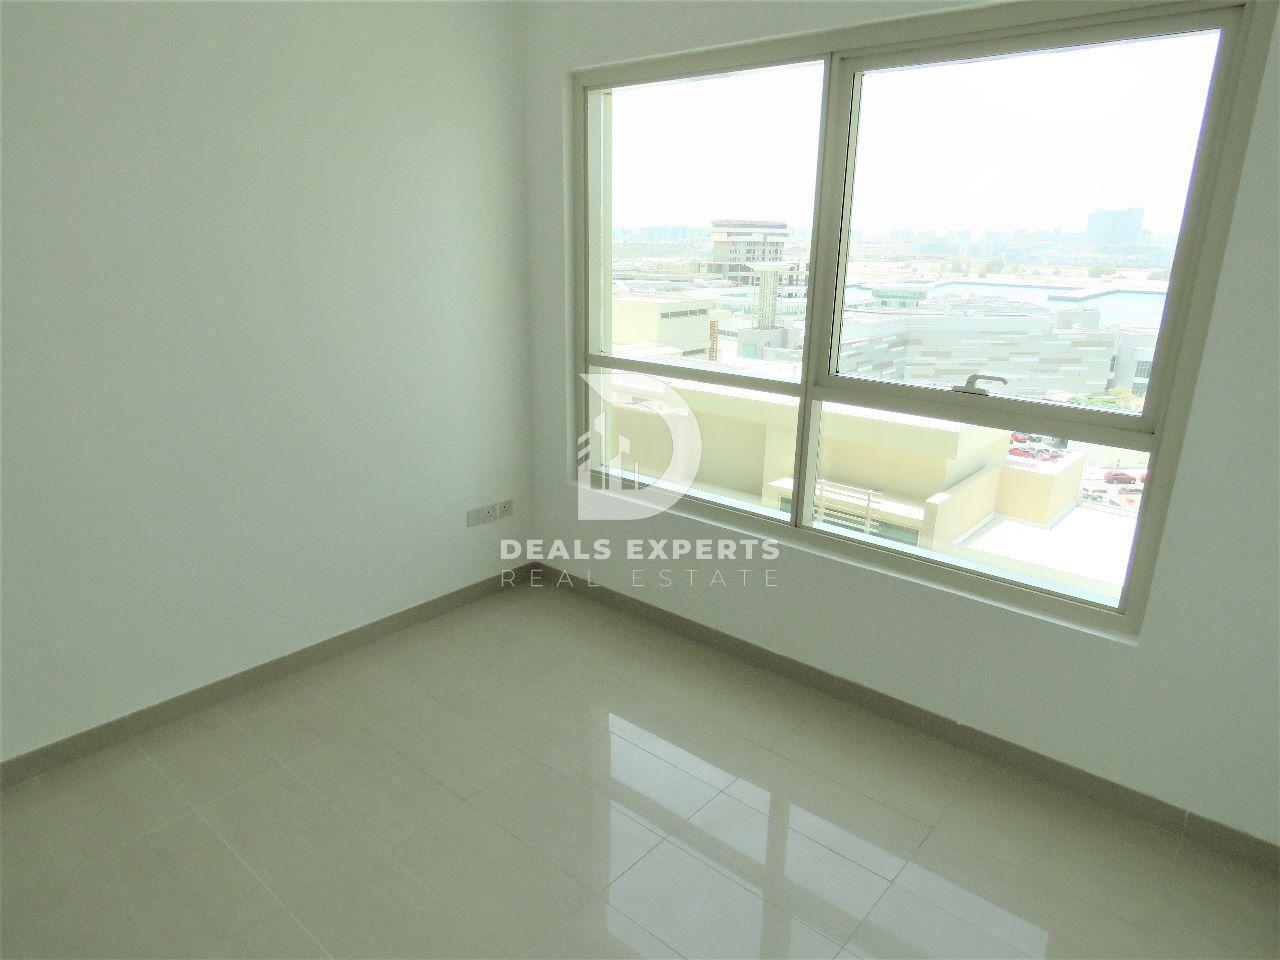 2 bed, 3 bath Apartment for sale in Burooj Views, Marina Square, Al Reem Island, Abu Dhabi for price AED 1230000 